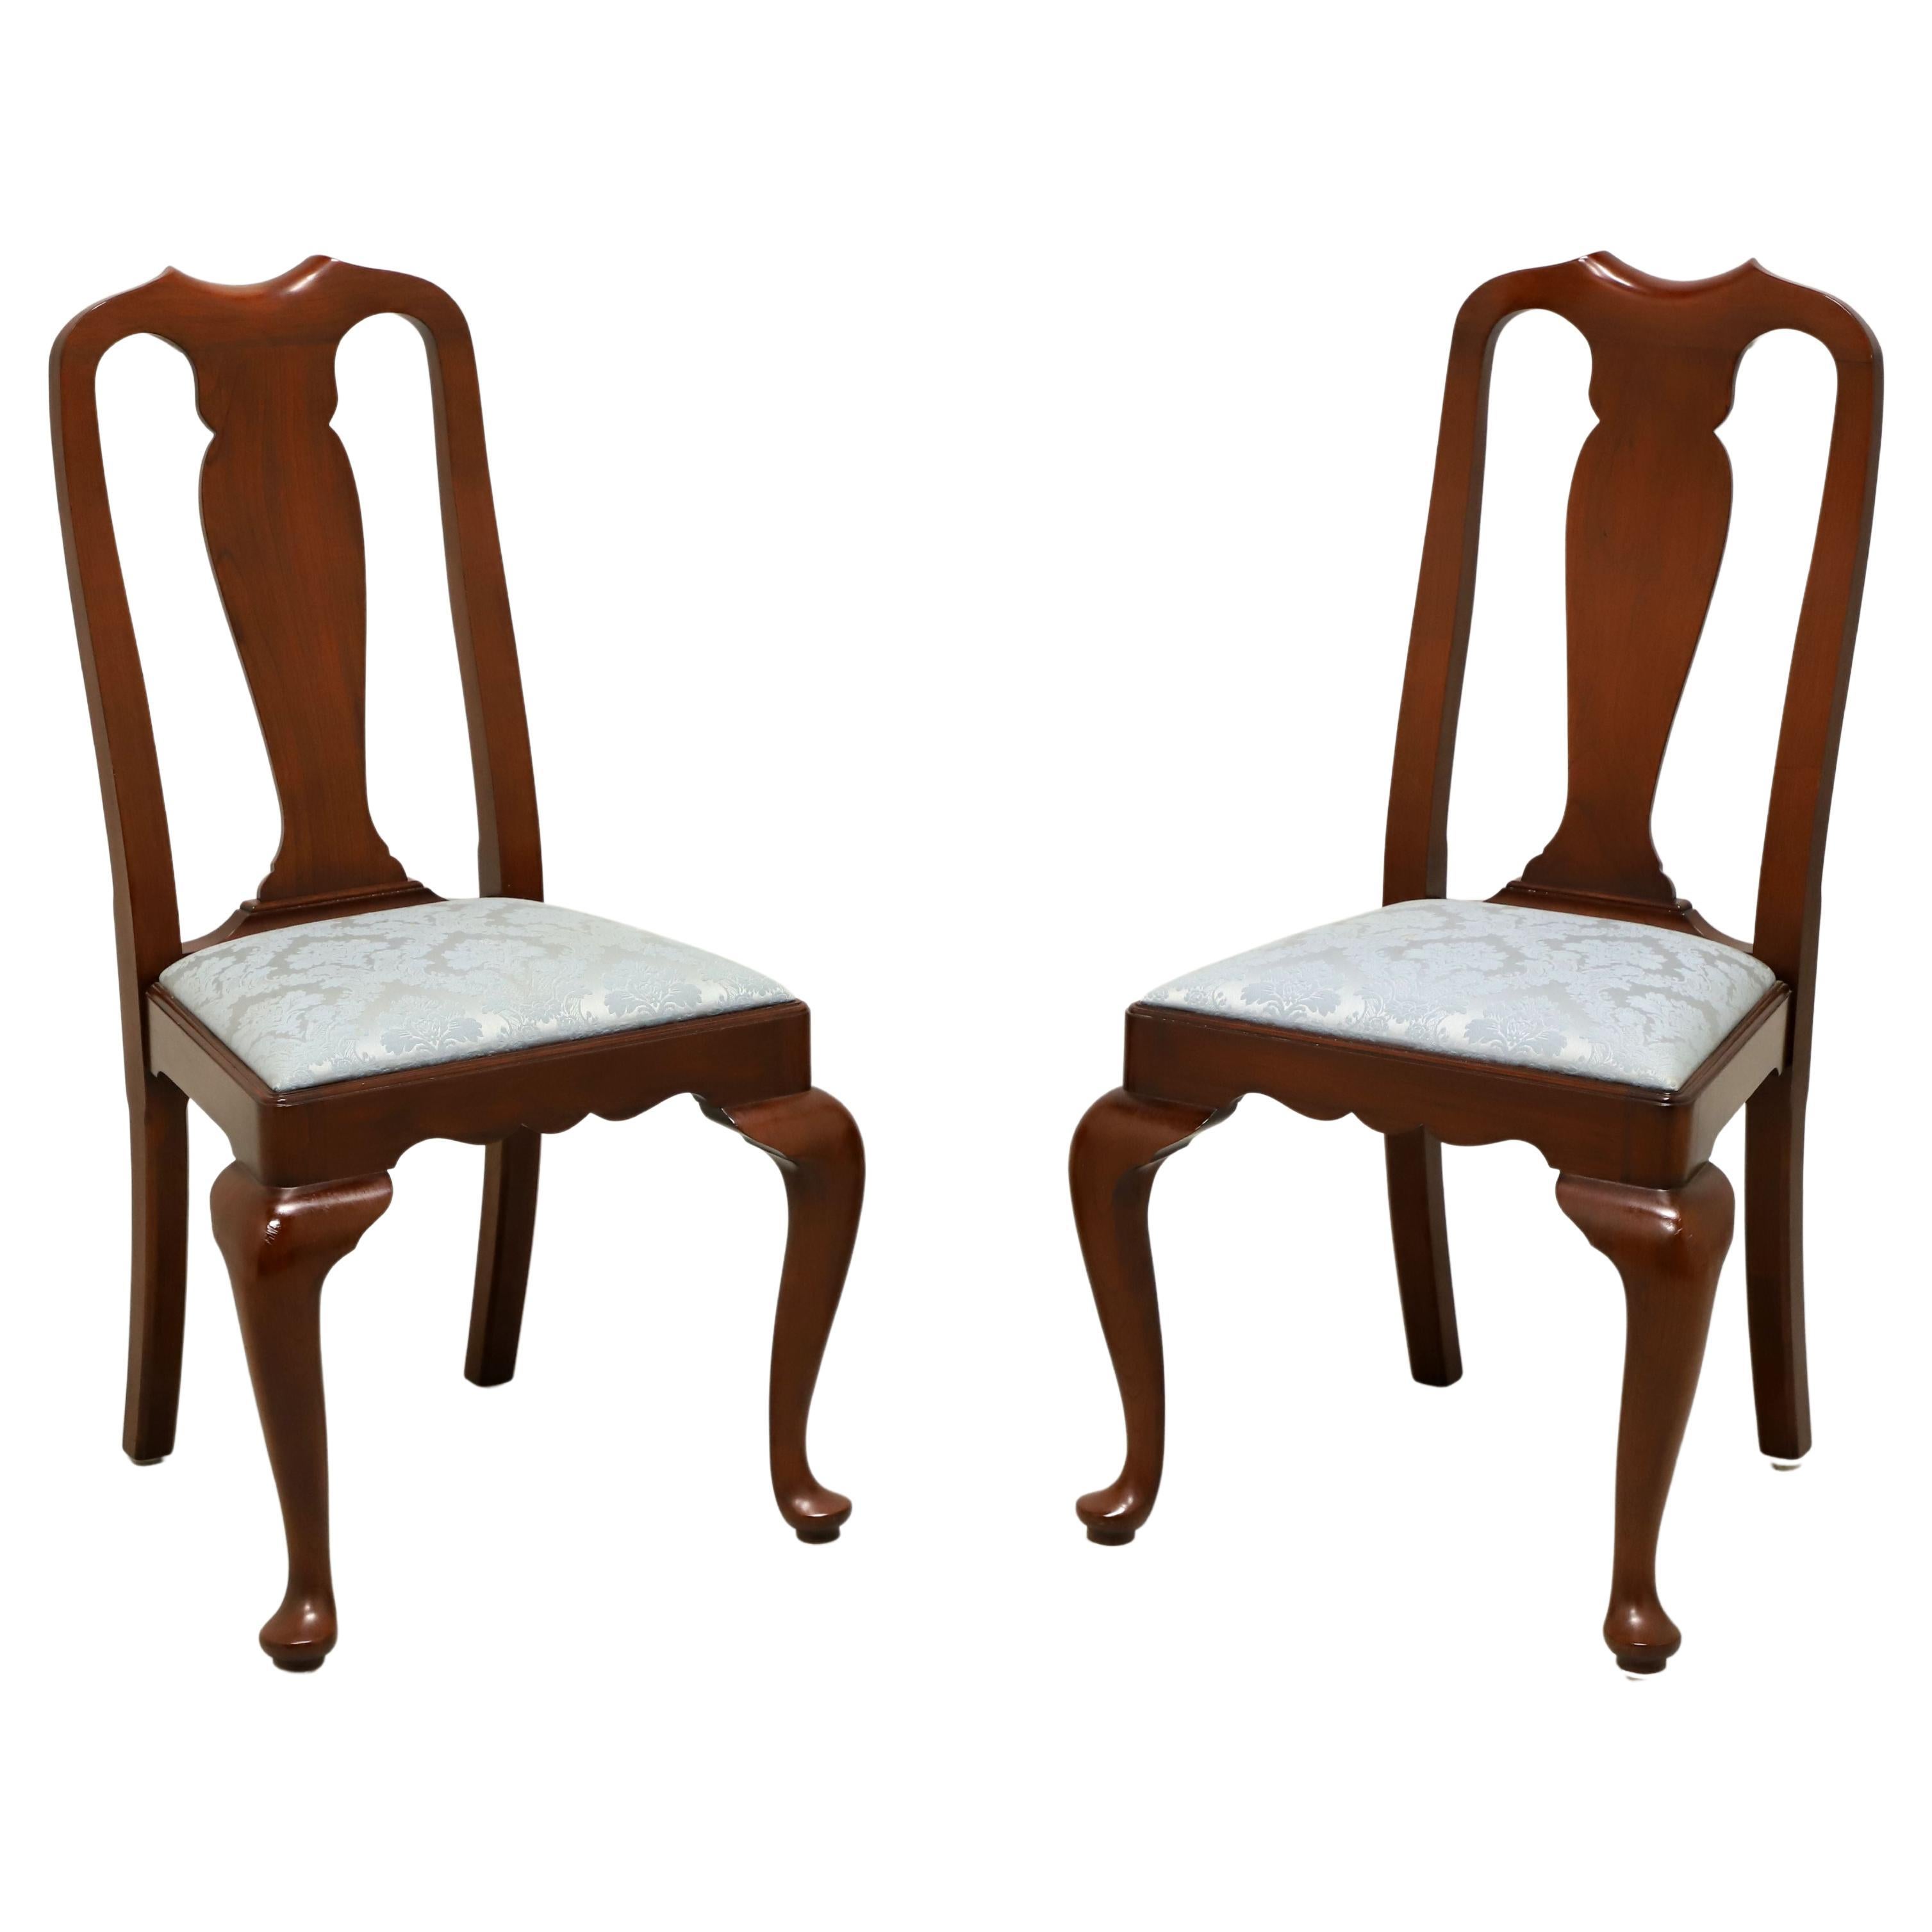 HENKEL HARRIS 109S 24 Wild Black Cherry Queen Anne Dining Side Chairs - Pair A